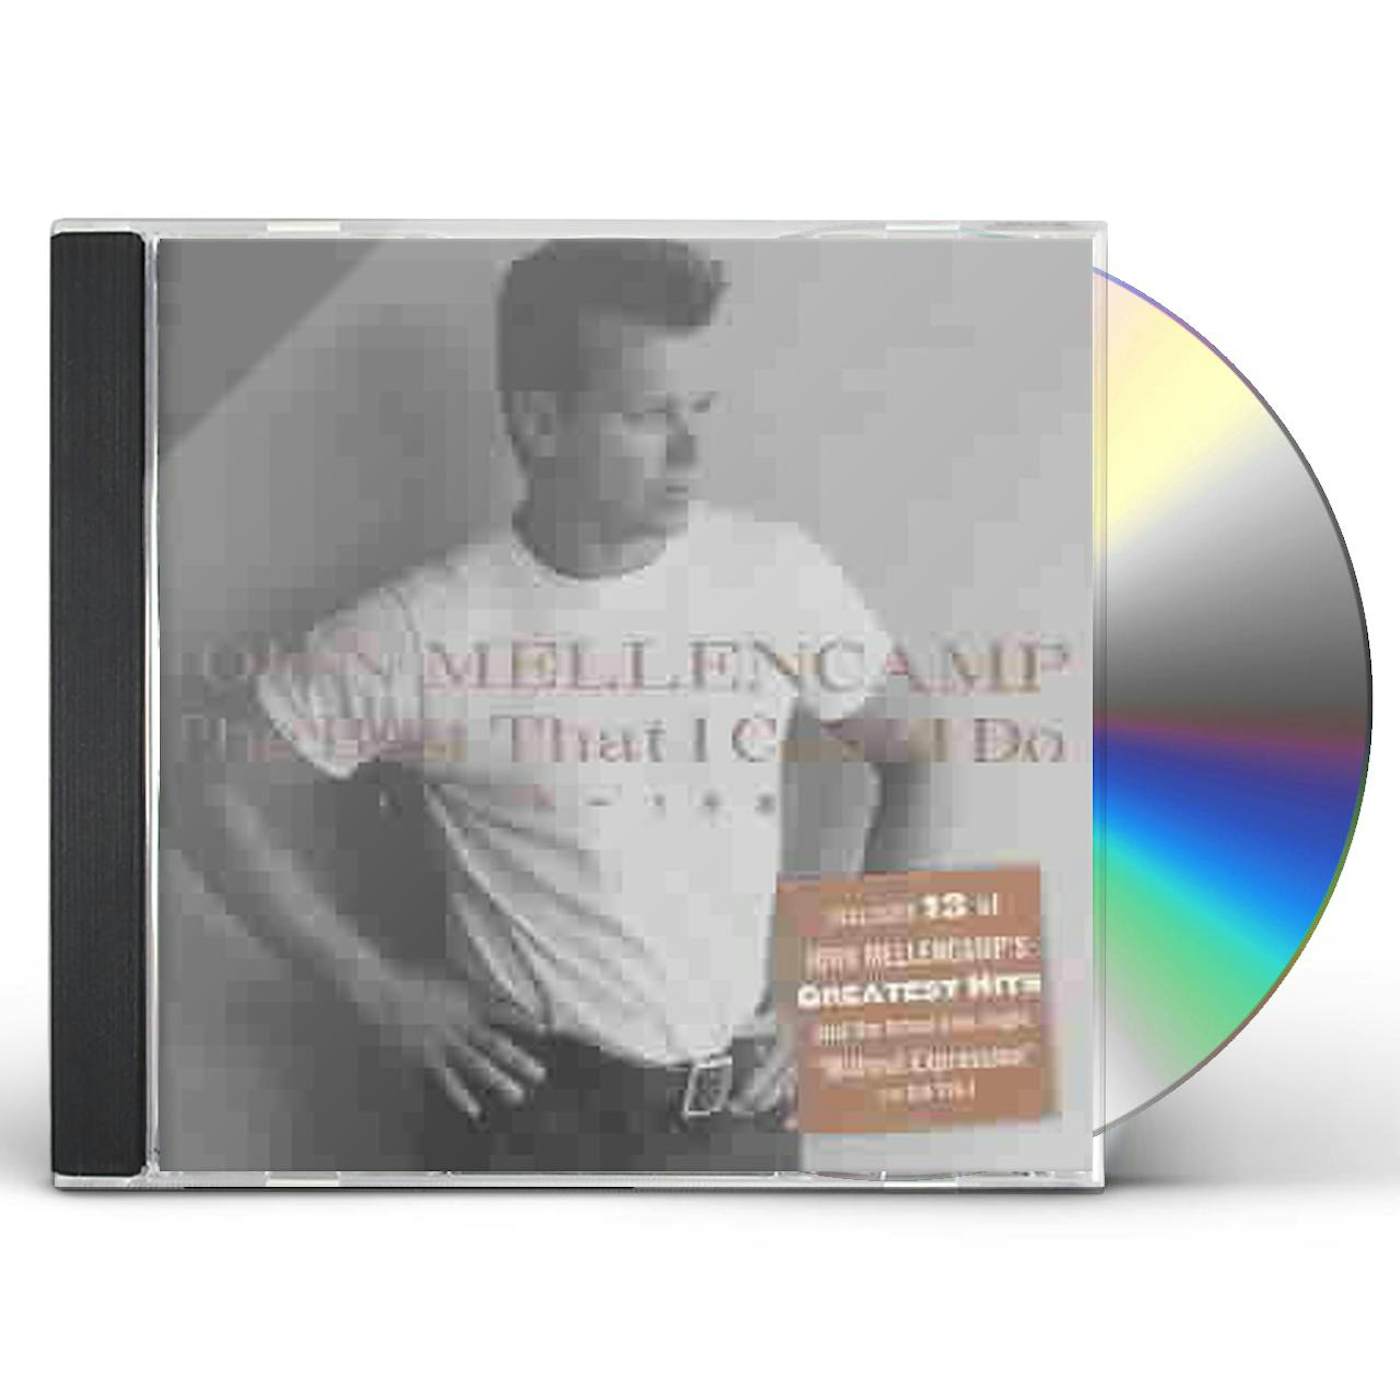 John Mellencamp BEST THAT I COULD DO: 1976-1988 CD